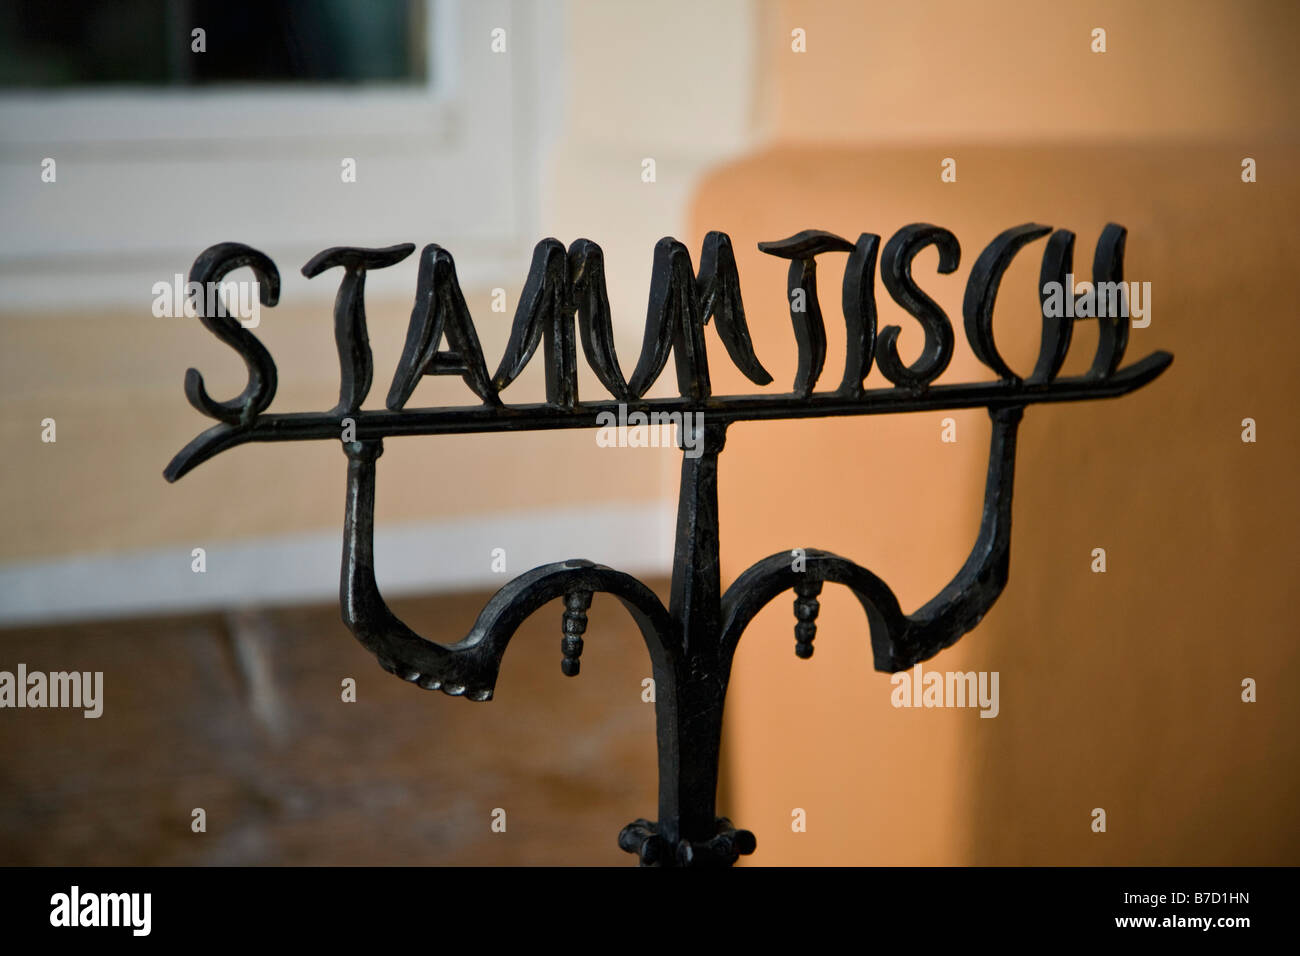 Stammtisch sign, Bavaria, Germany Stock Photo